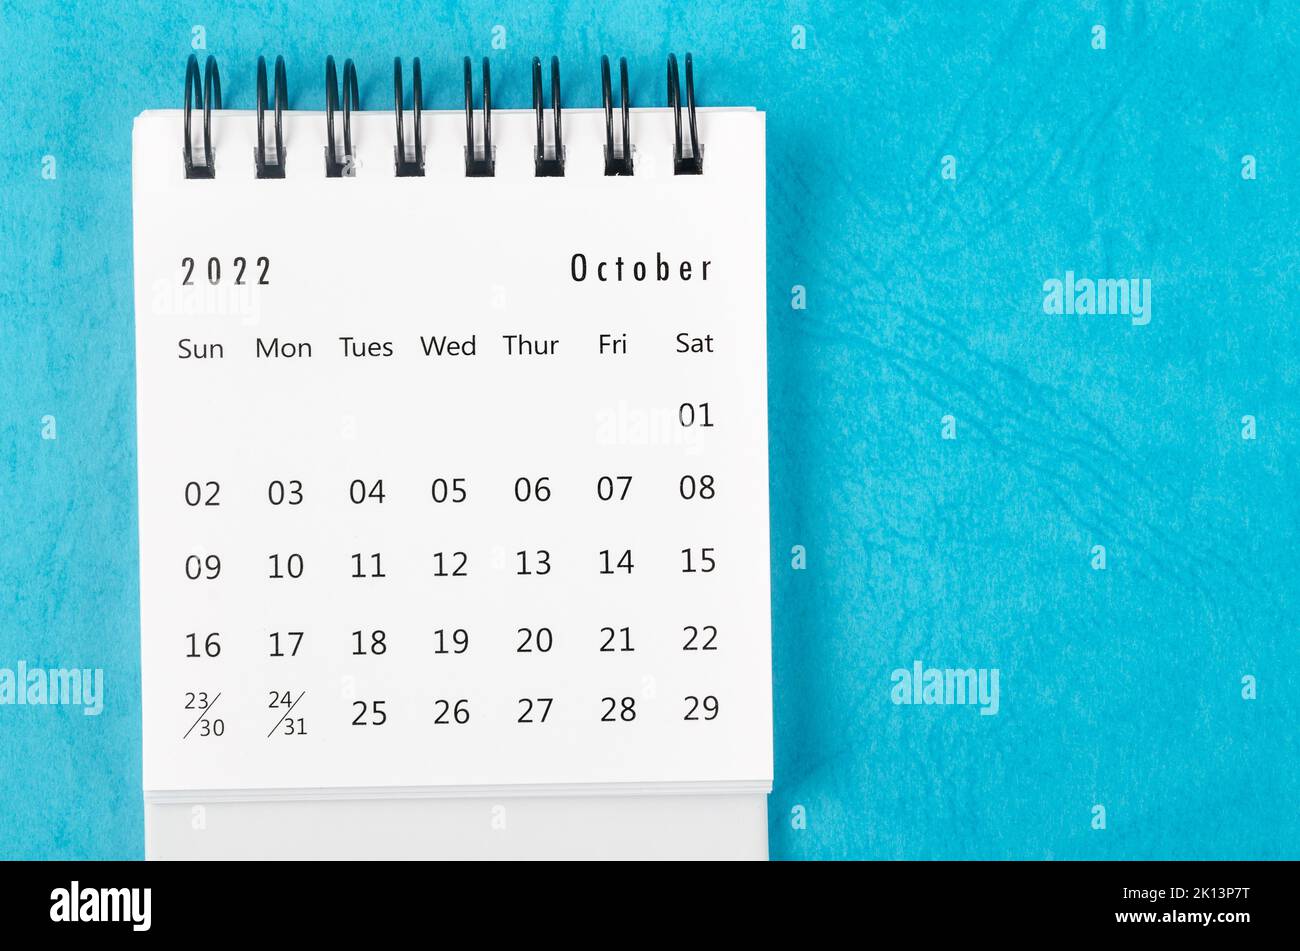 December 2022 Monthly desk calendar for 2022 year on blue background. Stock Photo